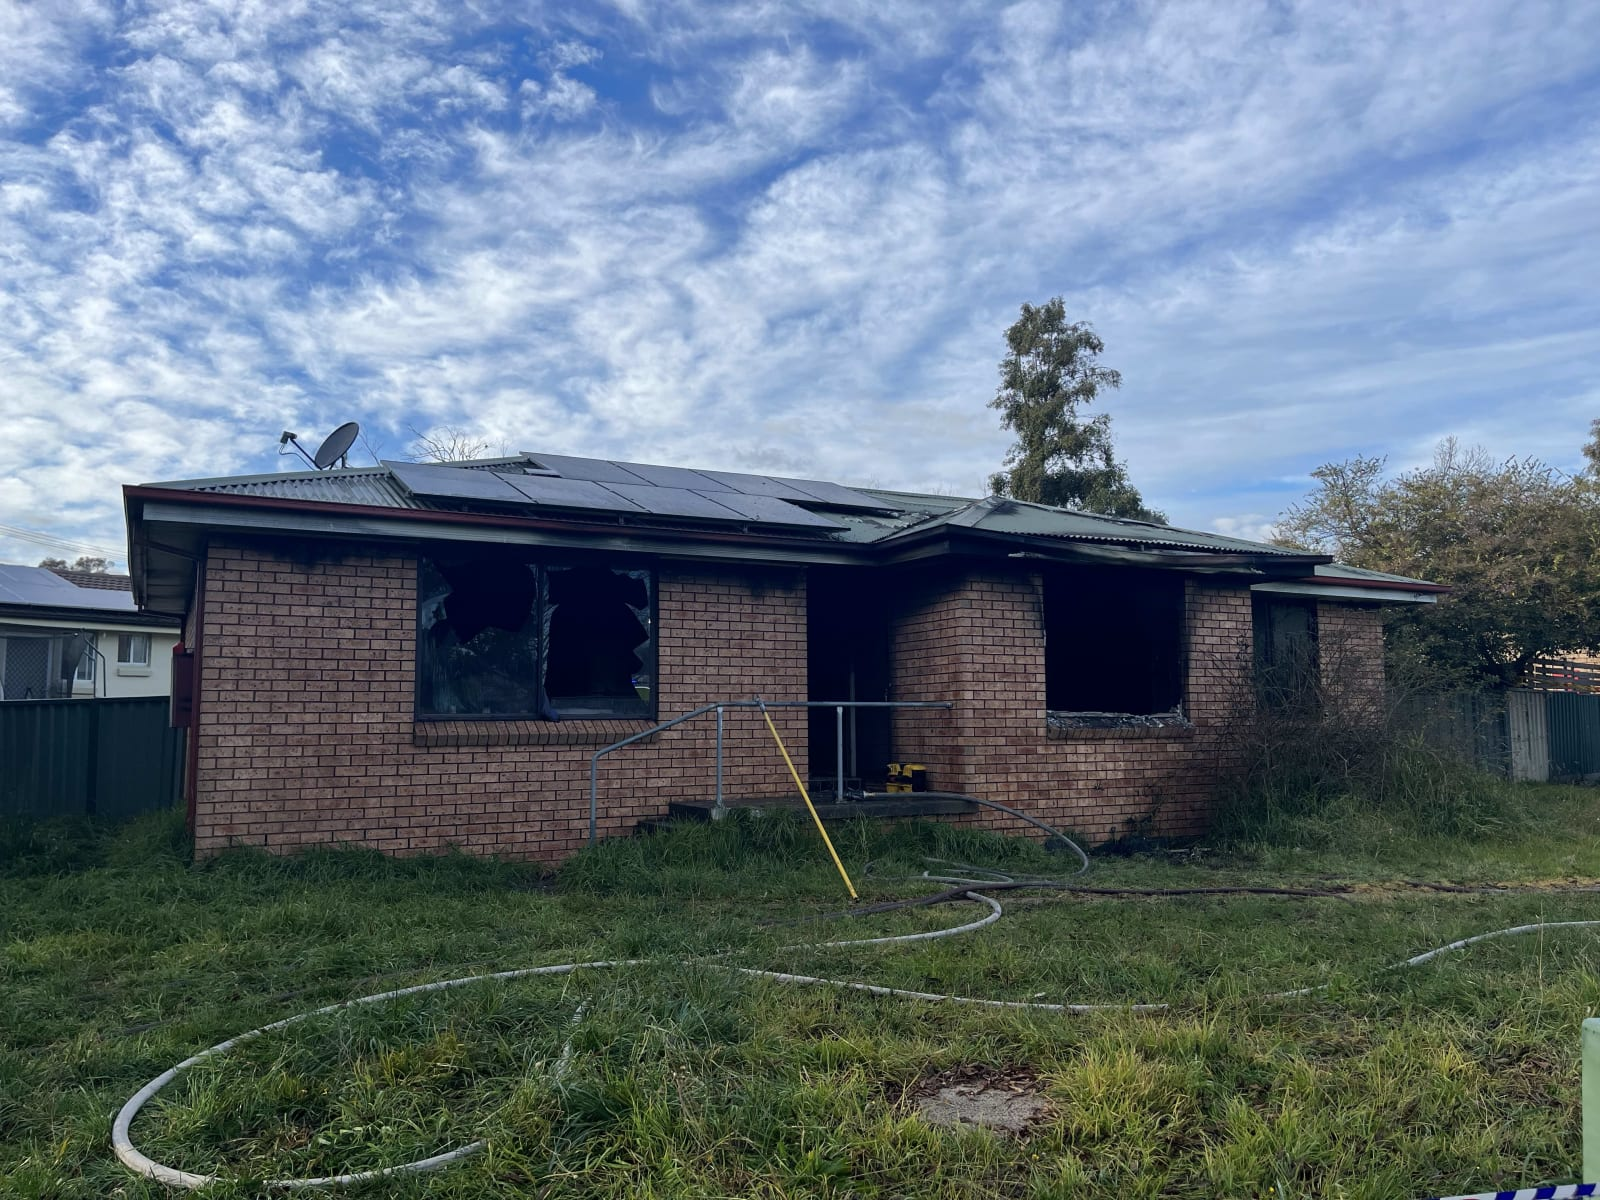 One dead, three injured in Orange house fire